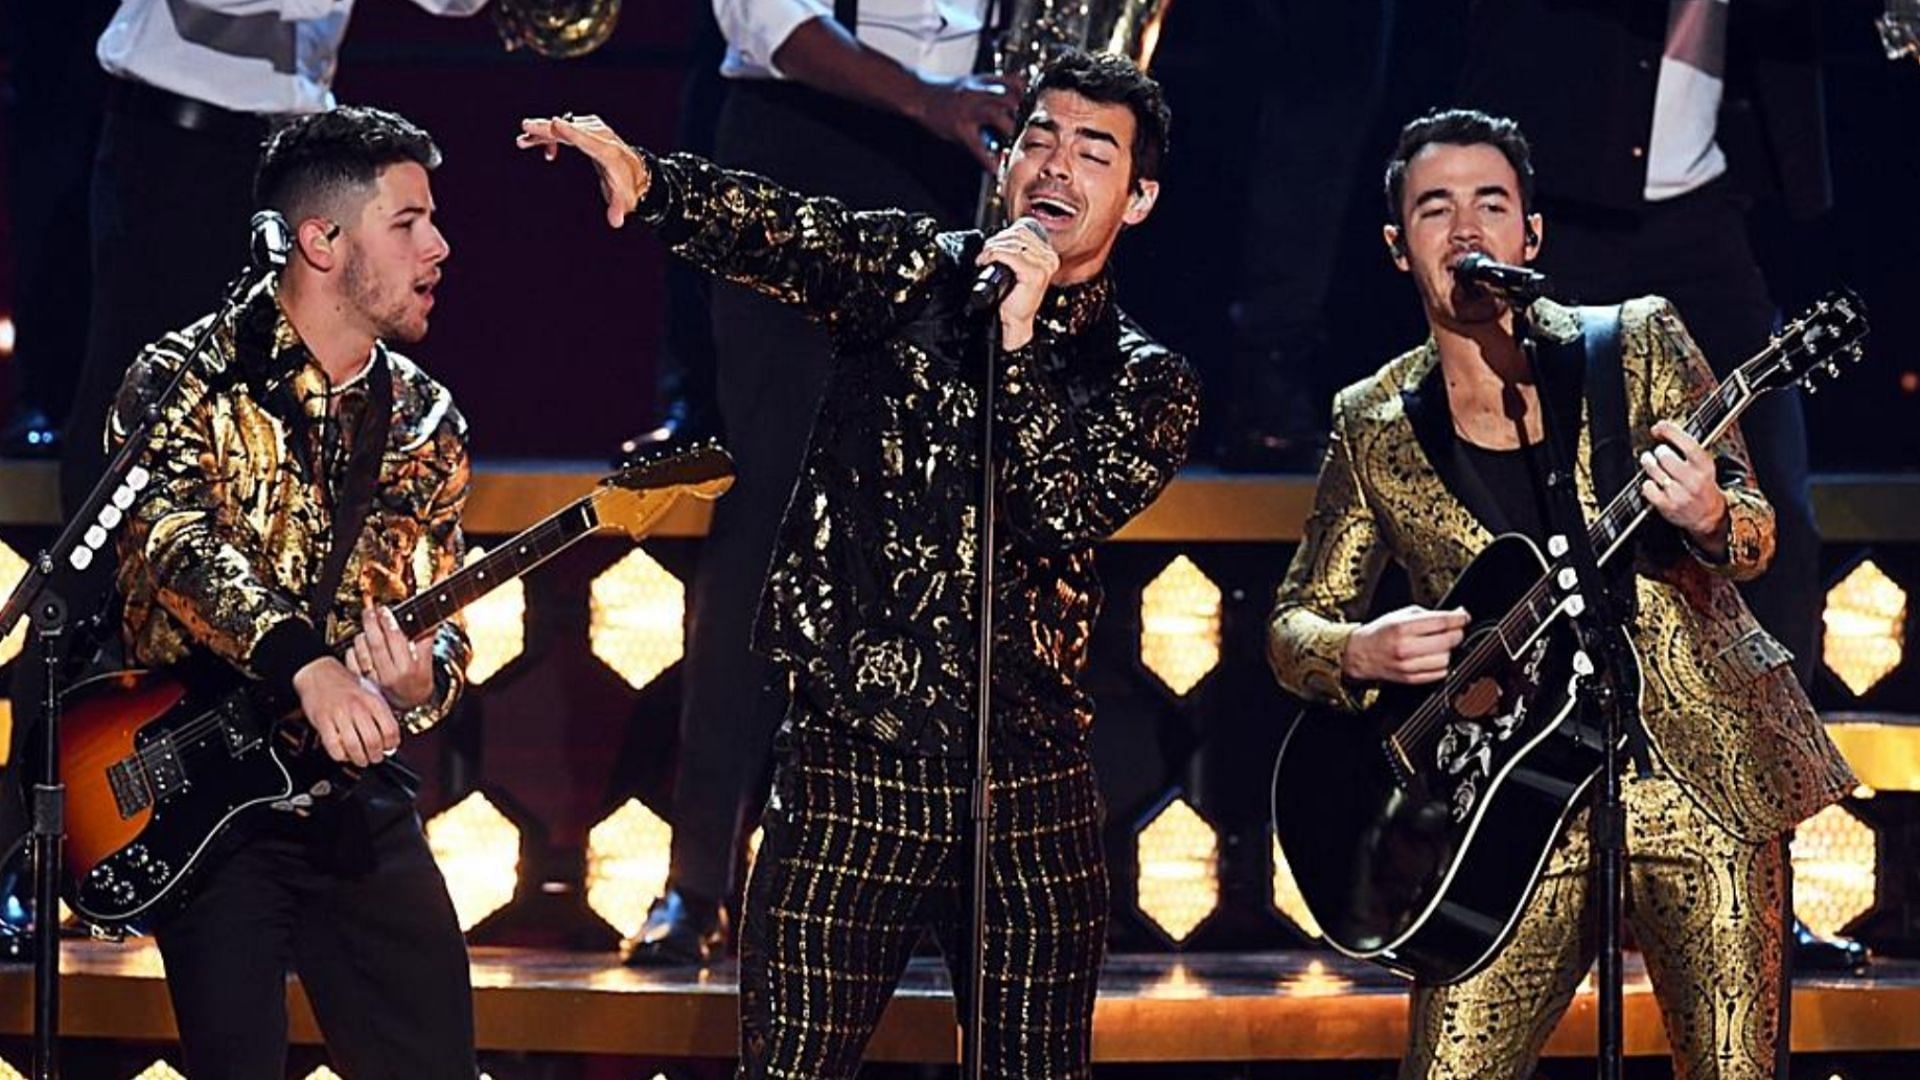 Jonas Brothers Residency Set for February 2023 Return in Las Vegas